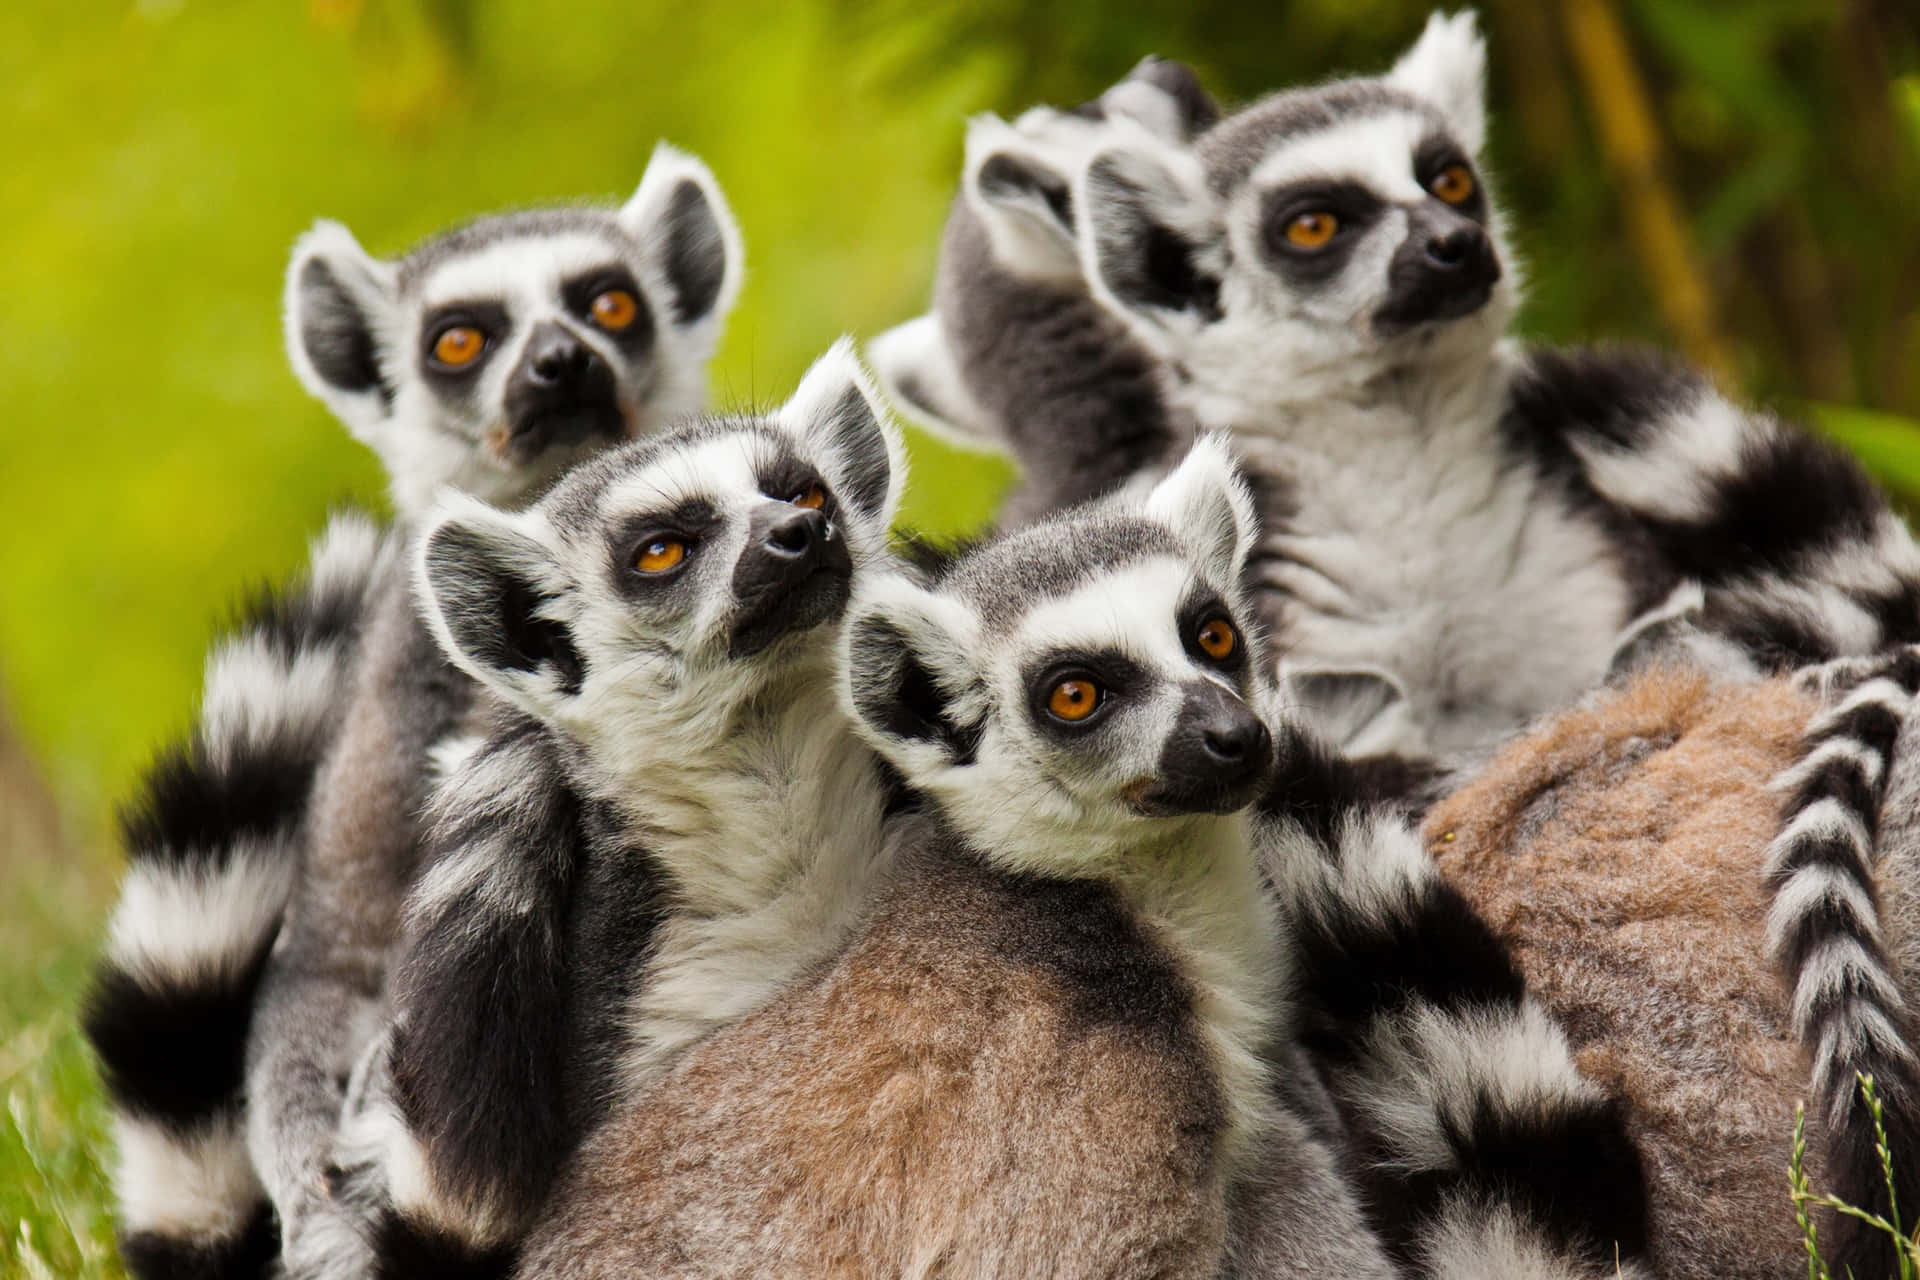 "curious Lemur In Its Natural Habitat" Wallpaper